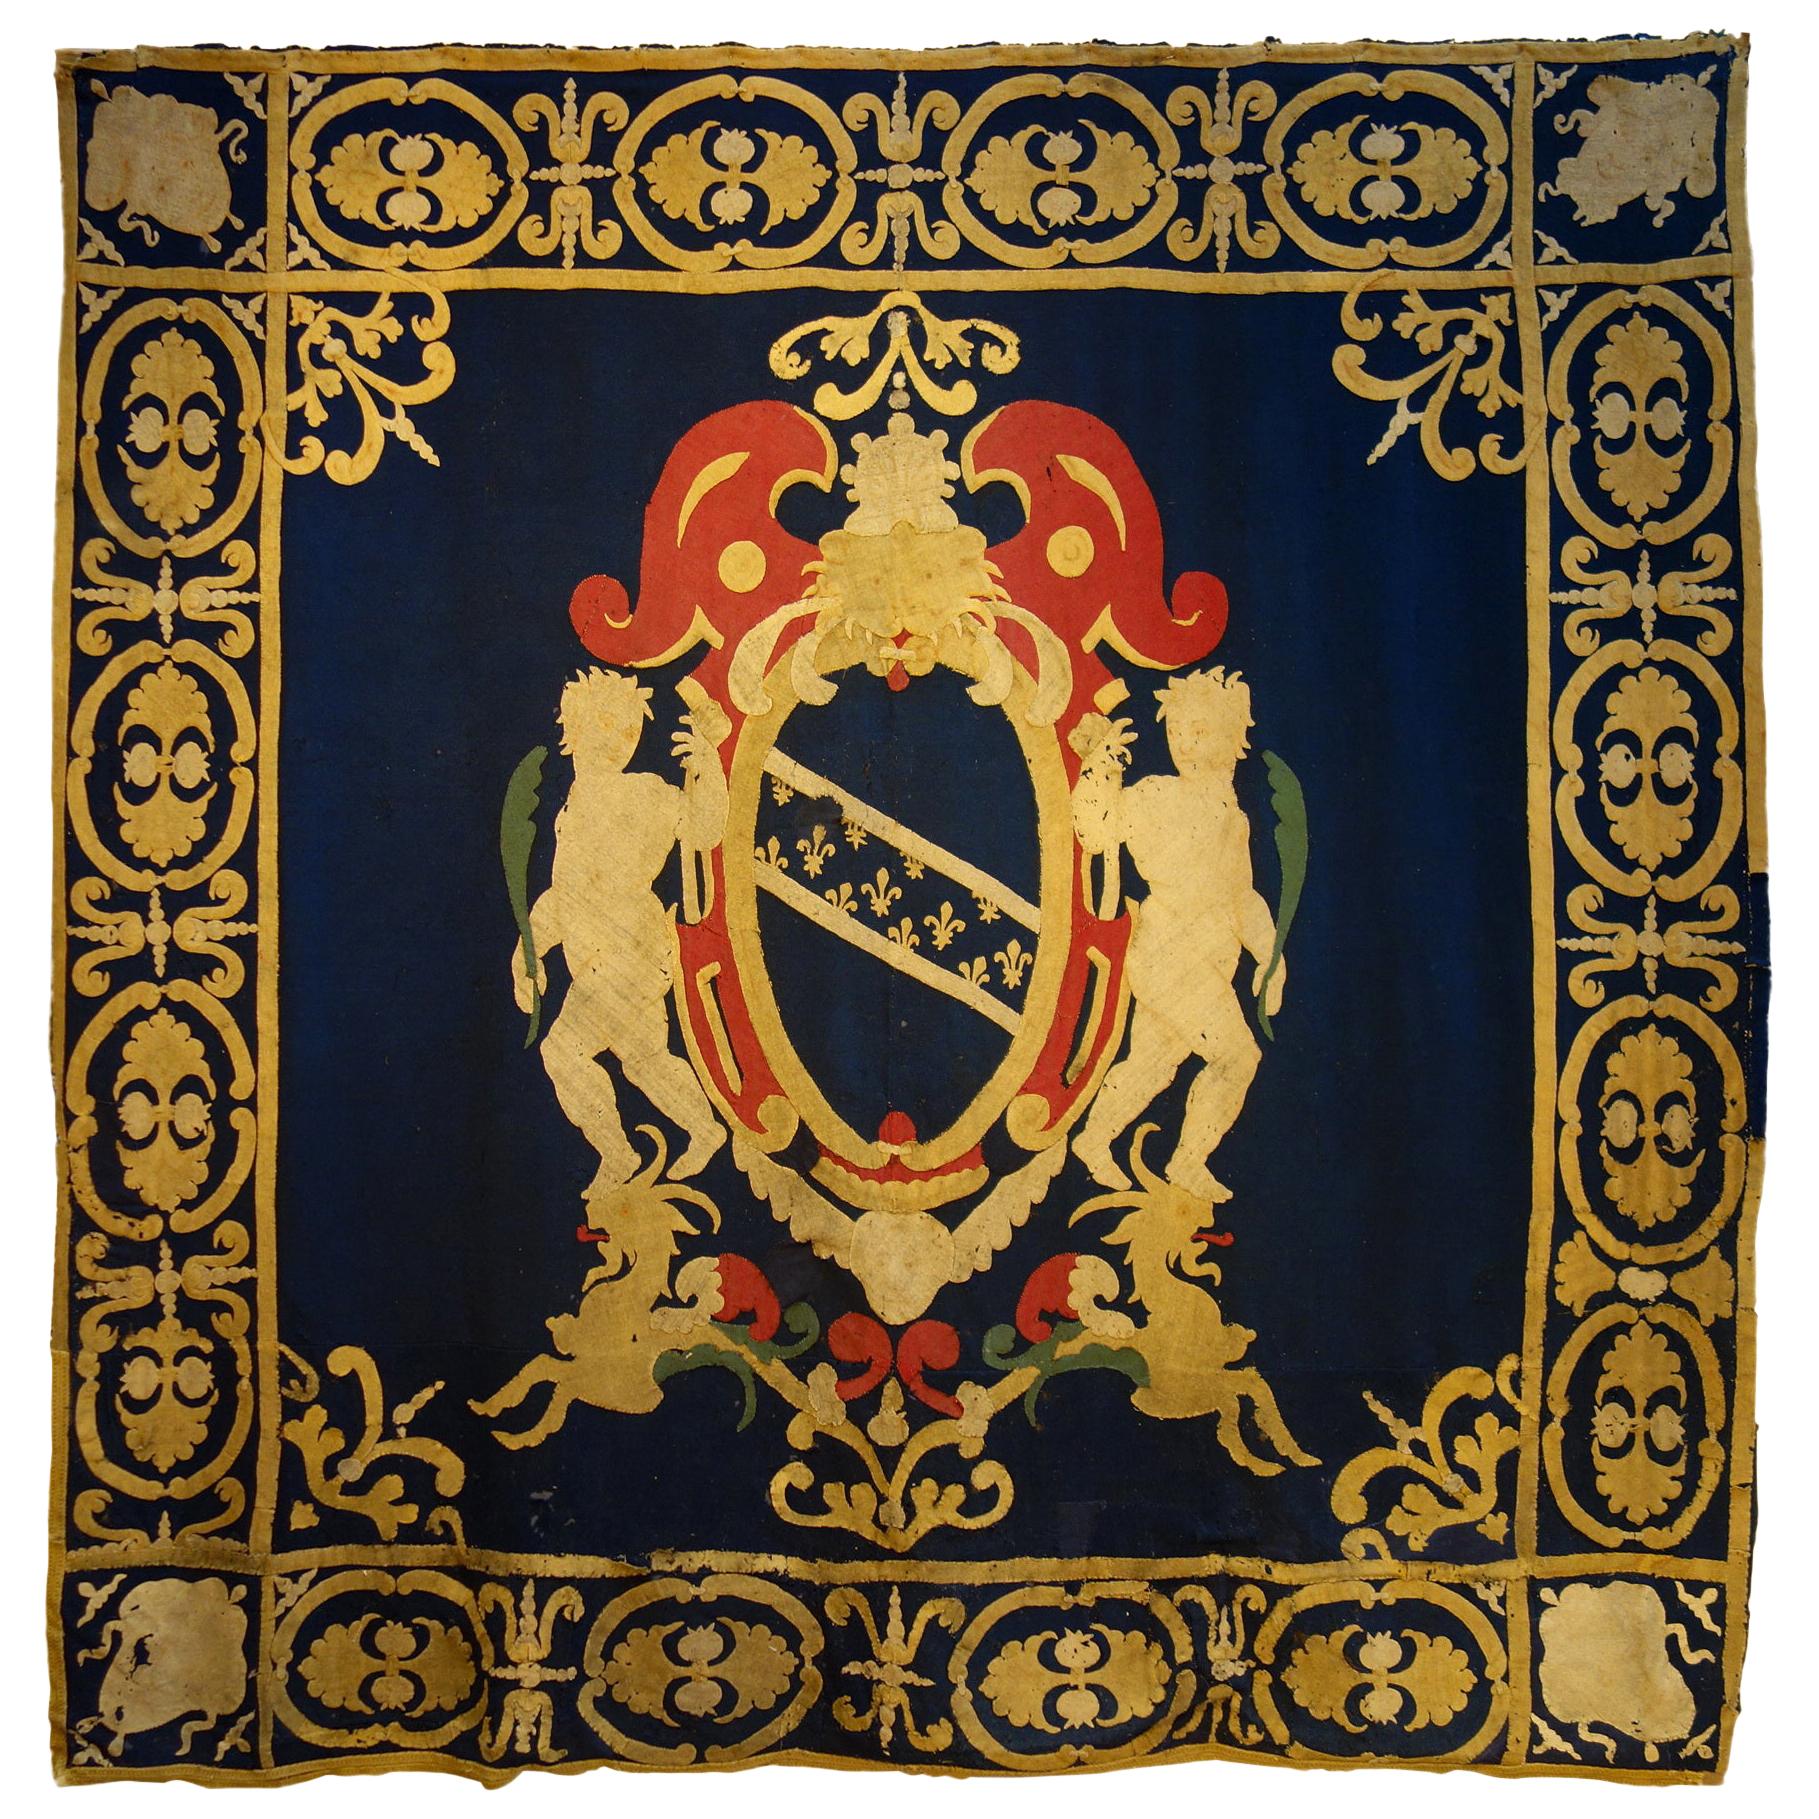 Late 17th Century Italian Heraldic Coat of Arms Tapestry, Lucca, circa 1690